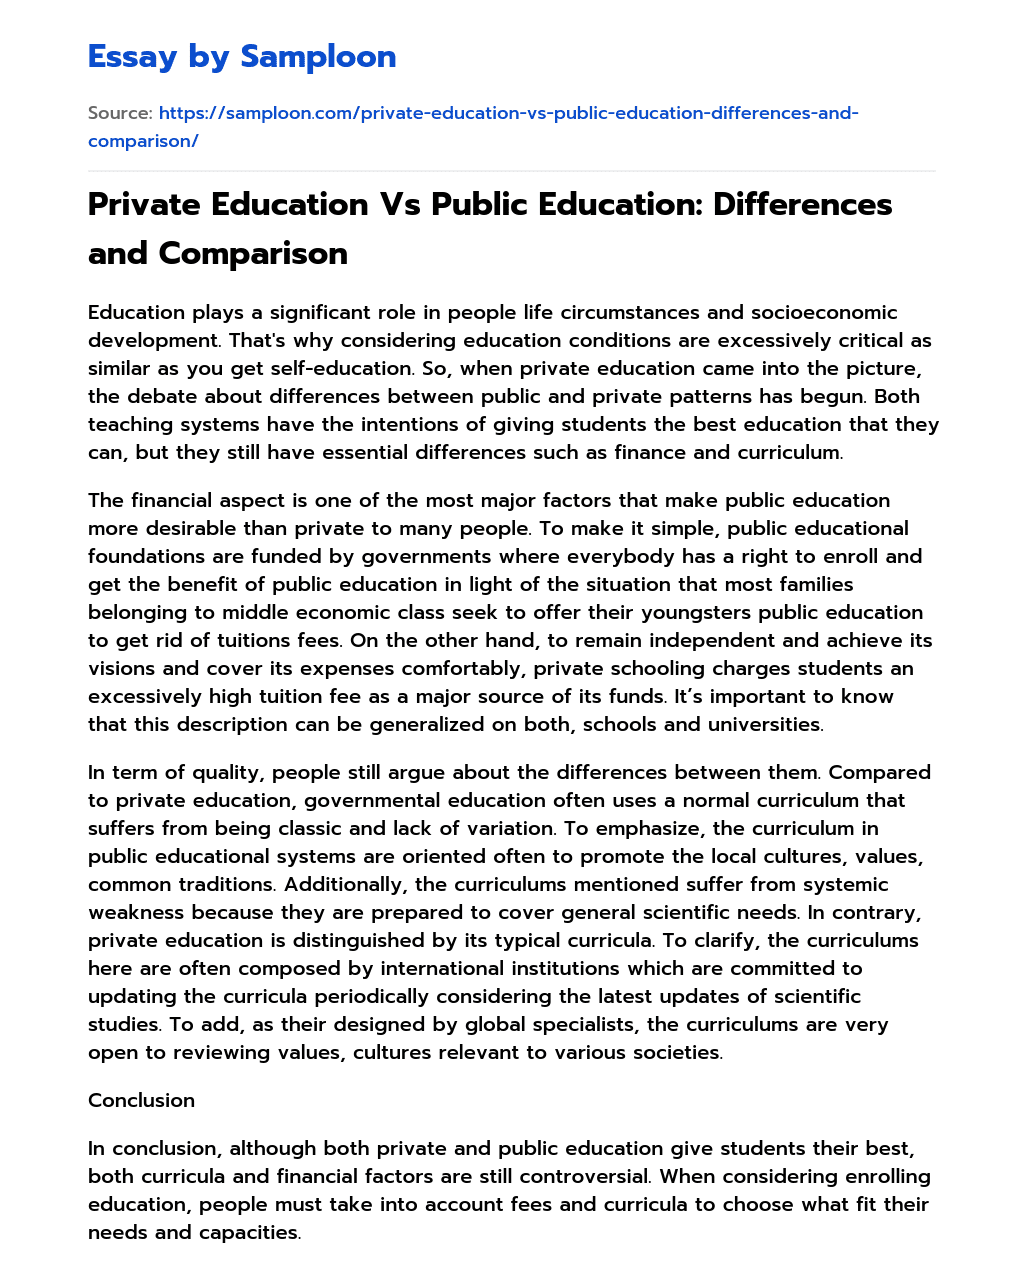 Private Education Vs Public Education: Differences and Comparison essay